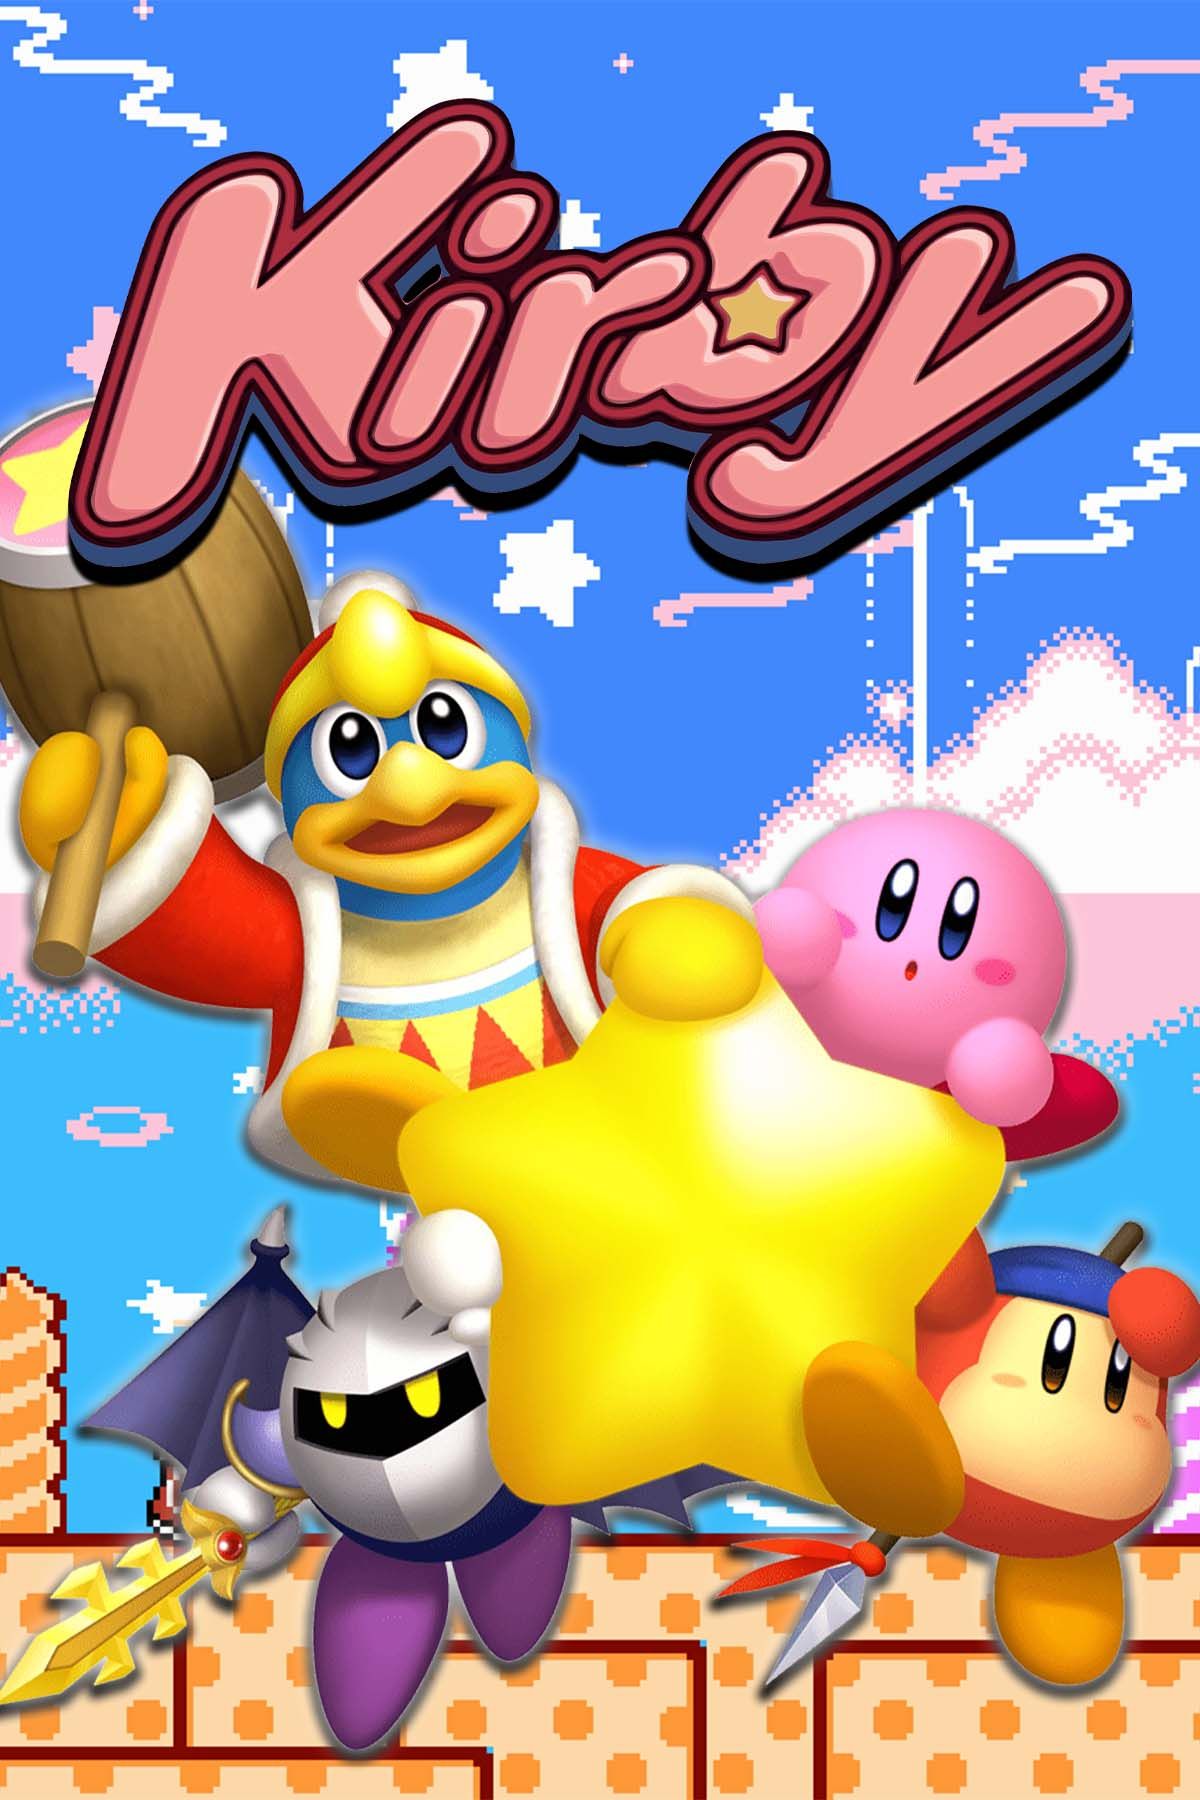 KirbyFranchiseTagPage